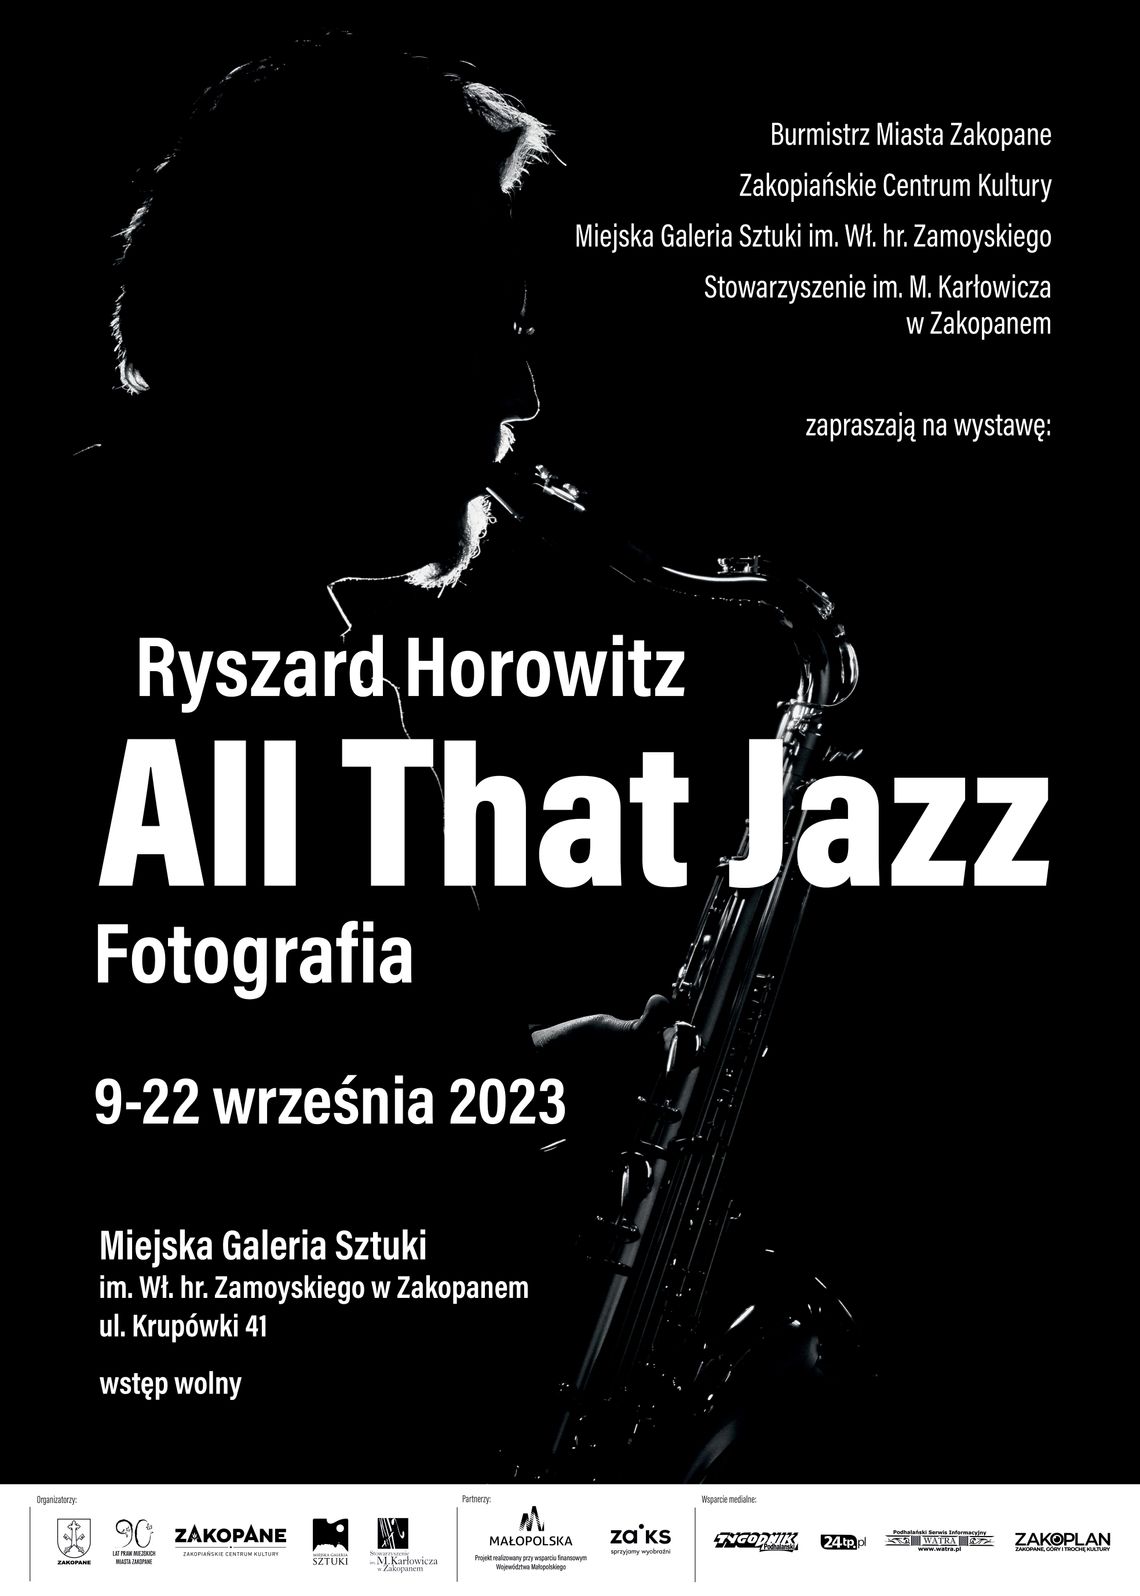 All That Jazz. Ryszard Horowitz – Fotografia